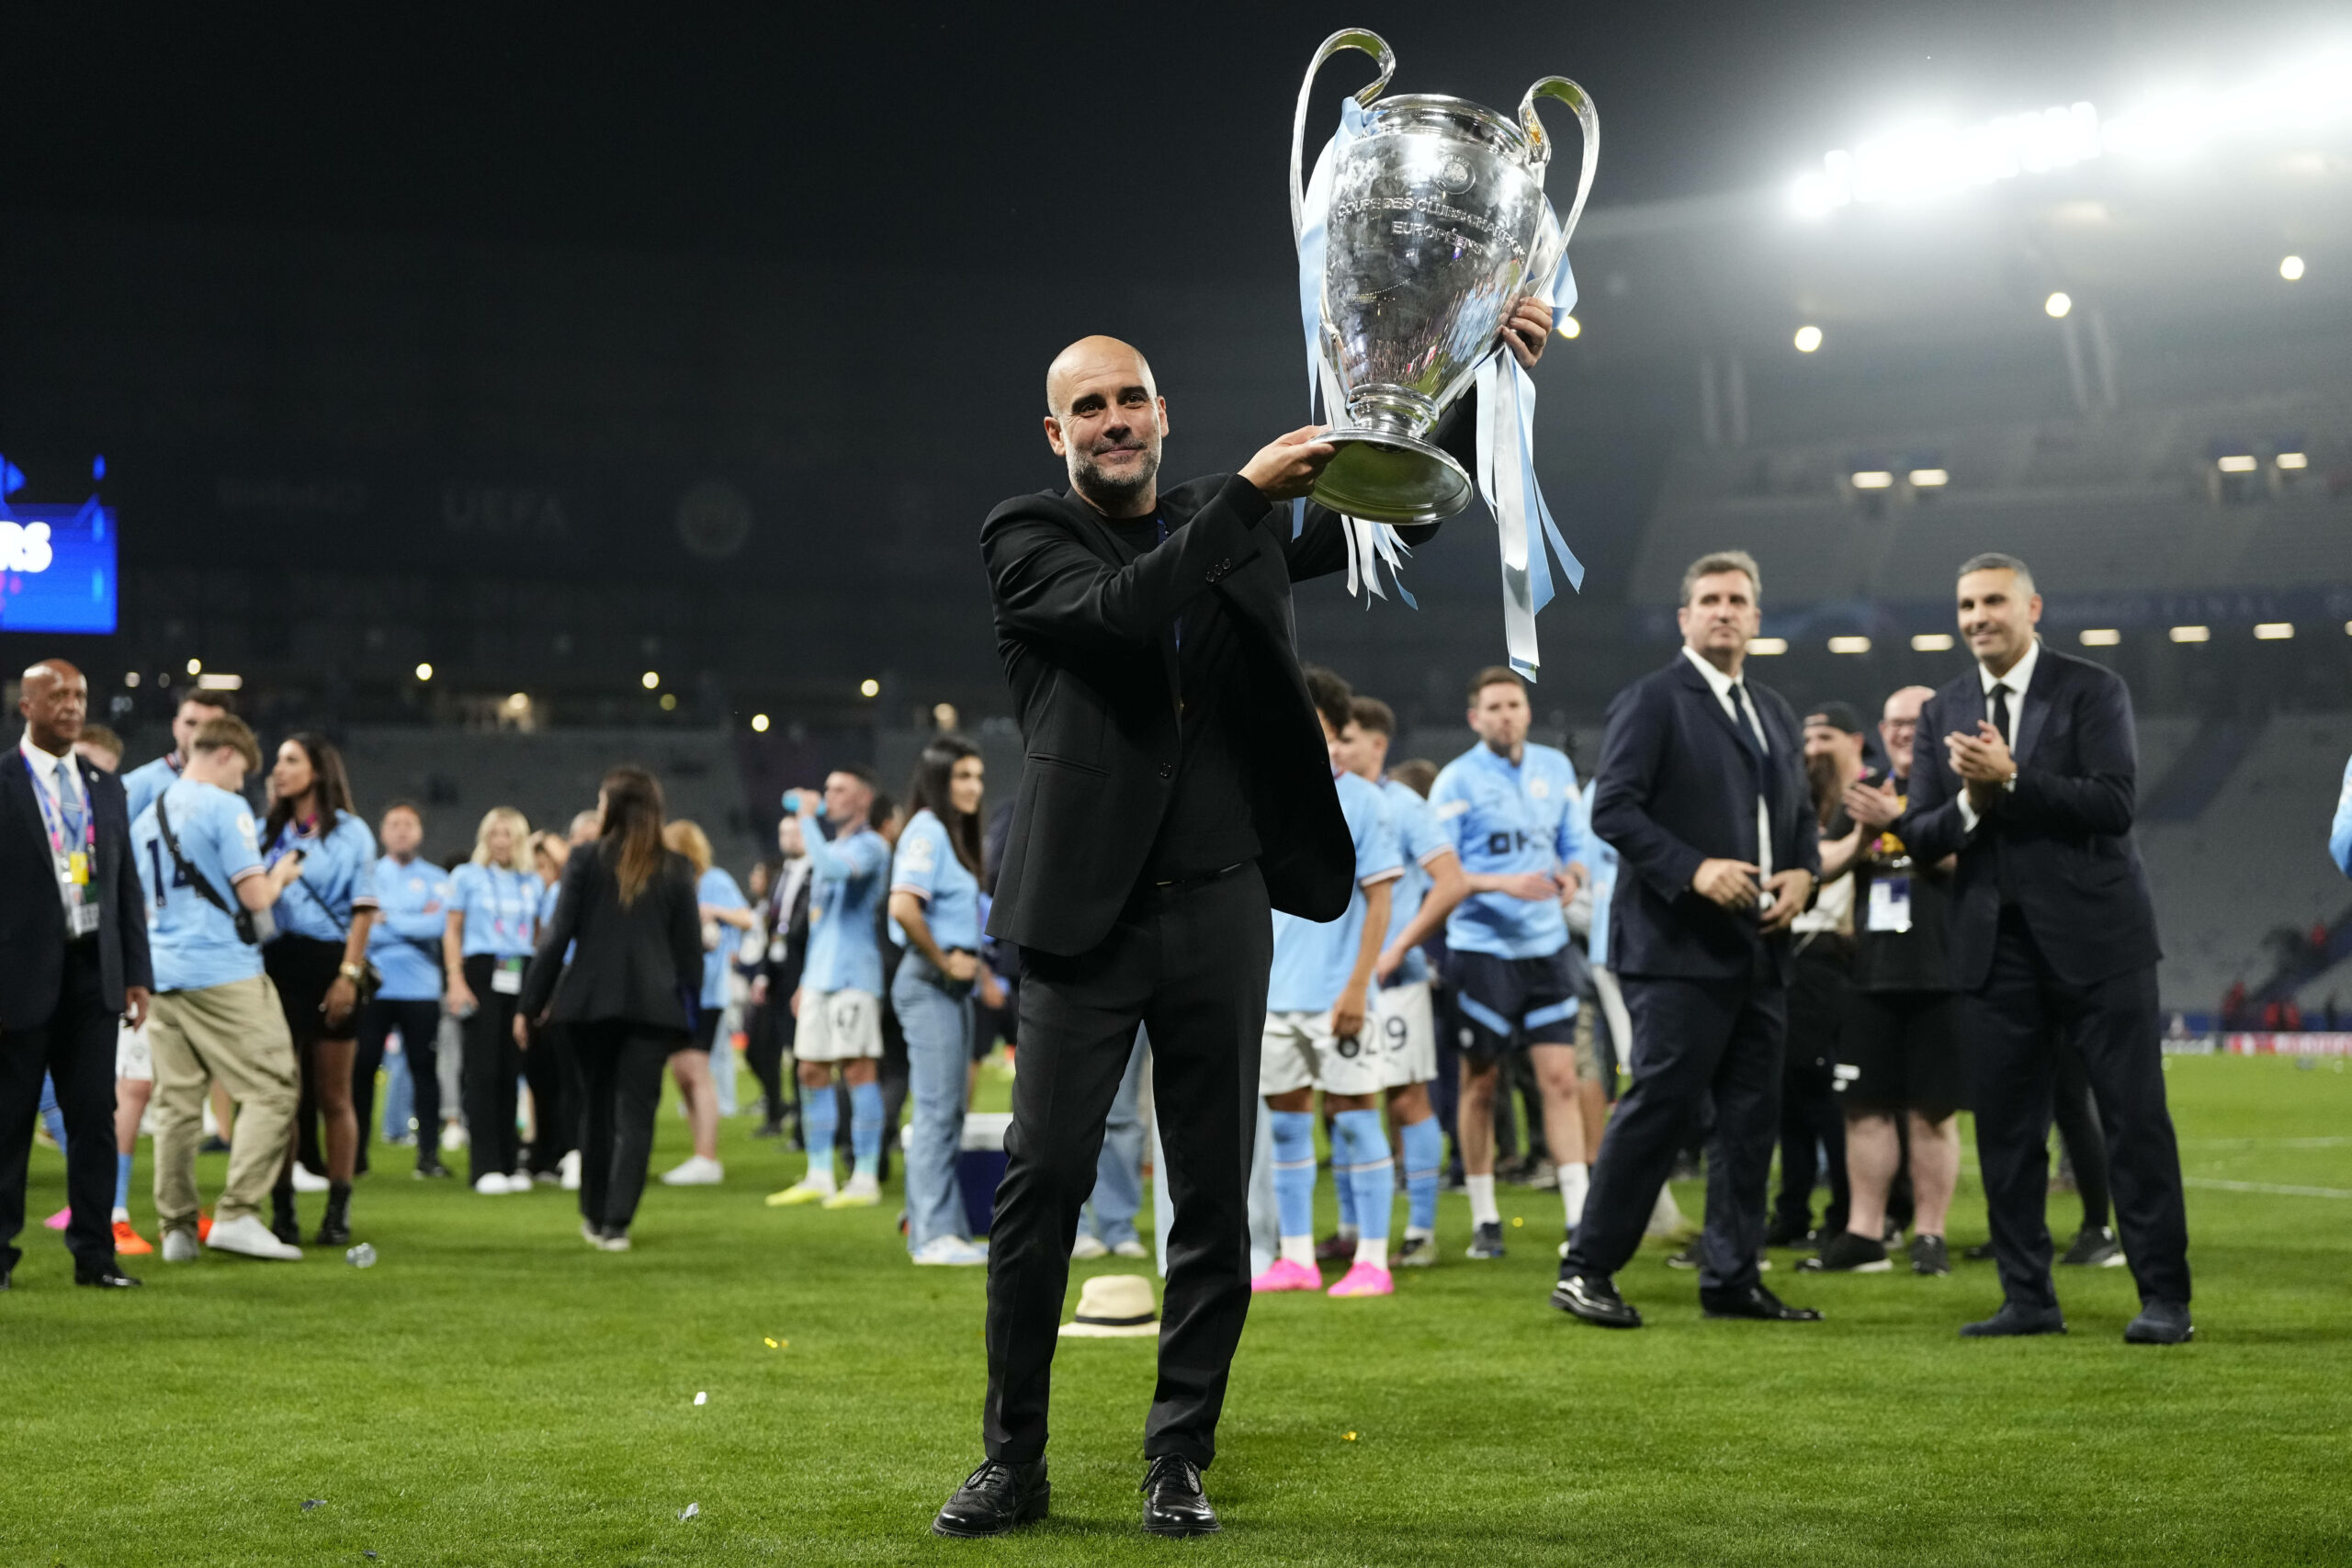 Manchester-City-Trainer Guardiola hebt die Champions-League-Trophäe in die Höhe